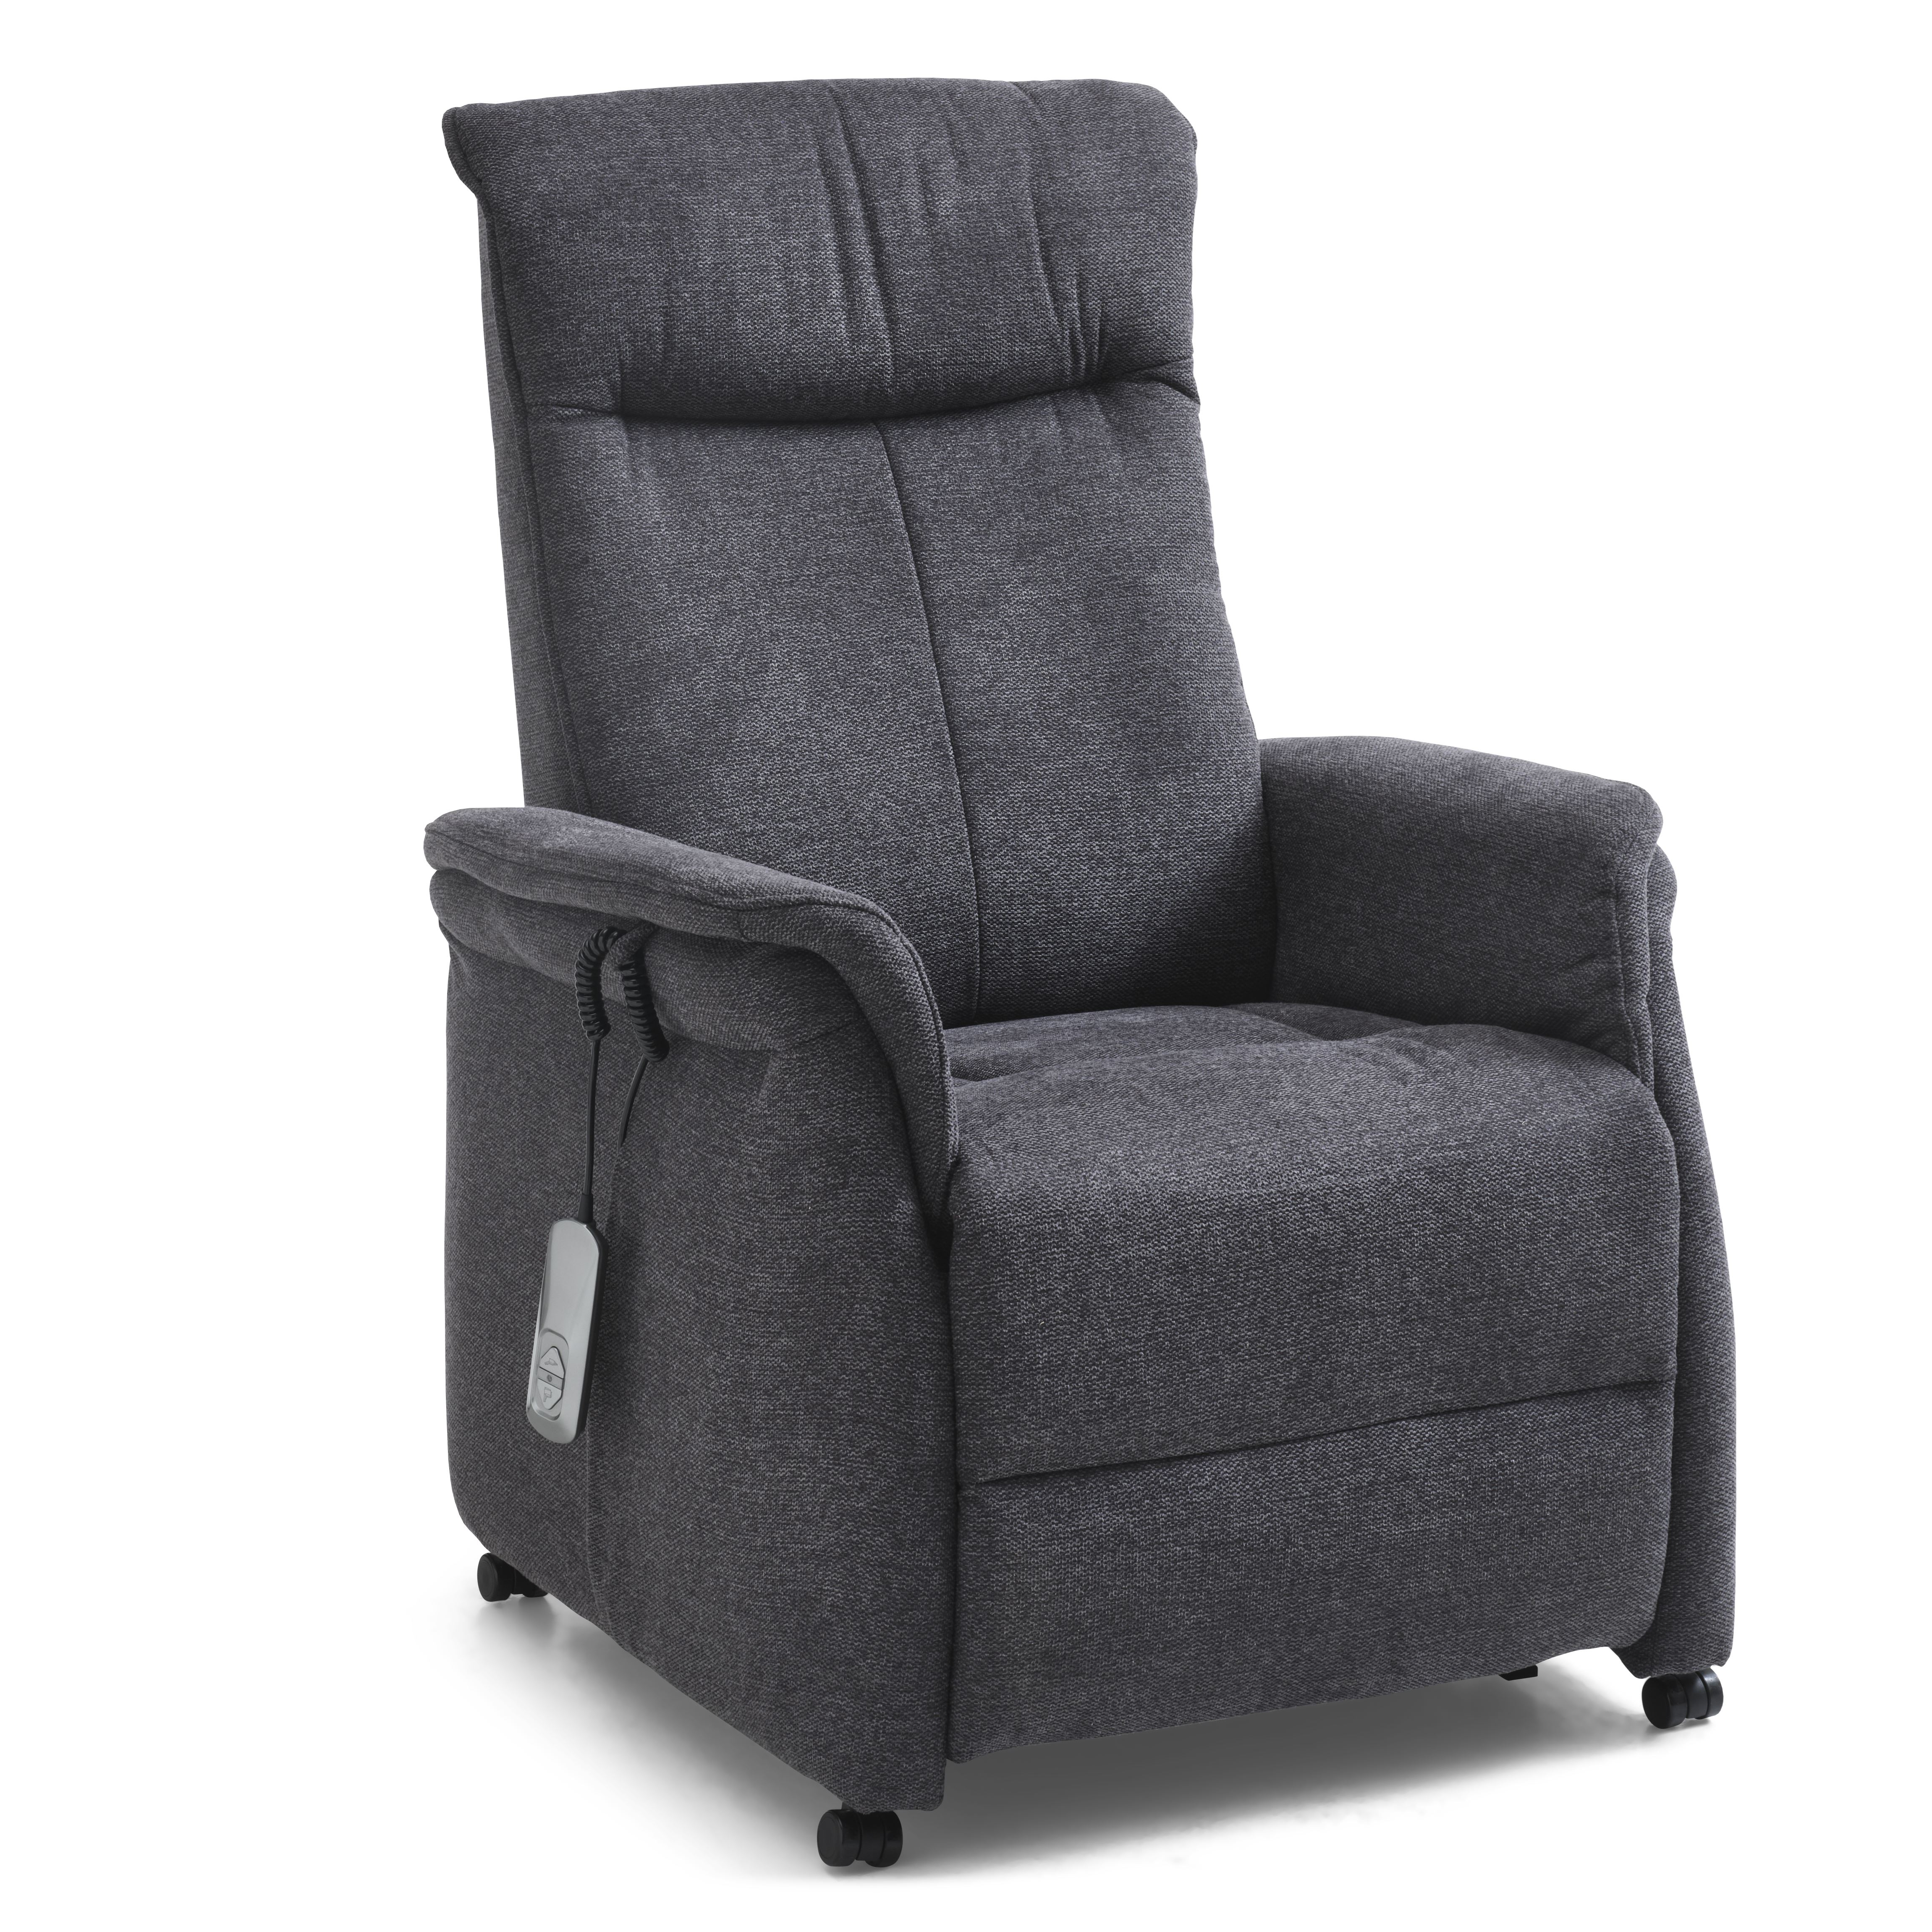 Victor recliner stol, m. 1 motor, sædeløft, vippefunktion, skammel, armlæn, hjul - antracitgrå stof